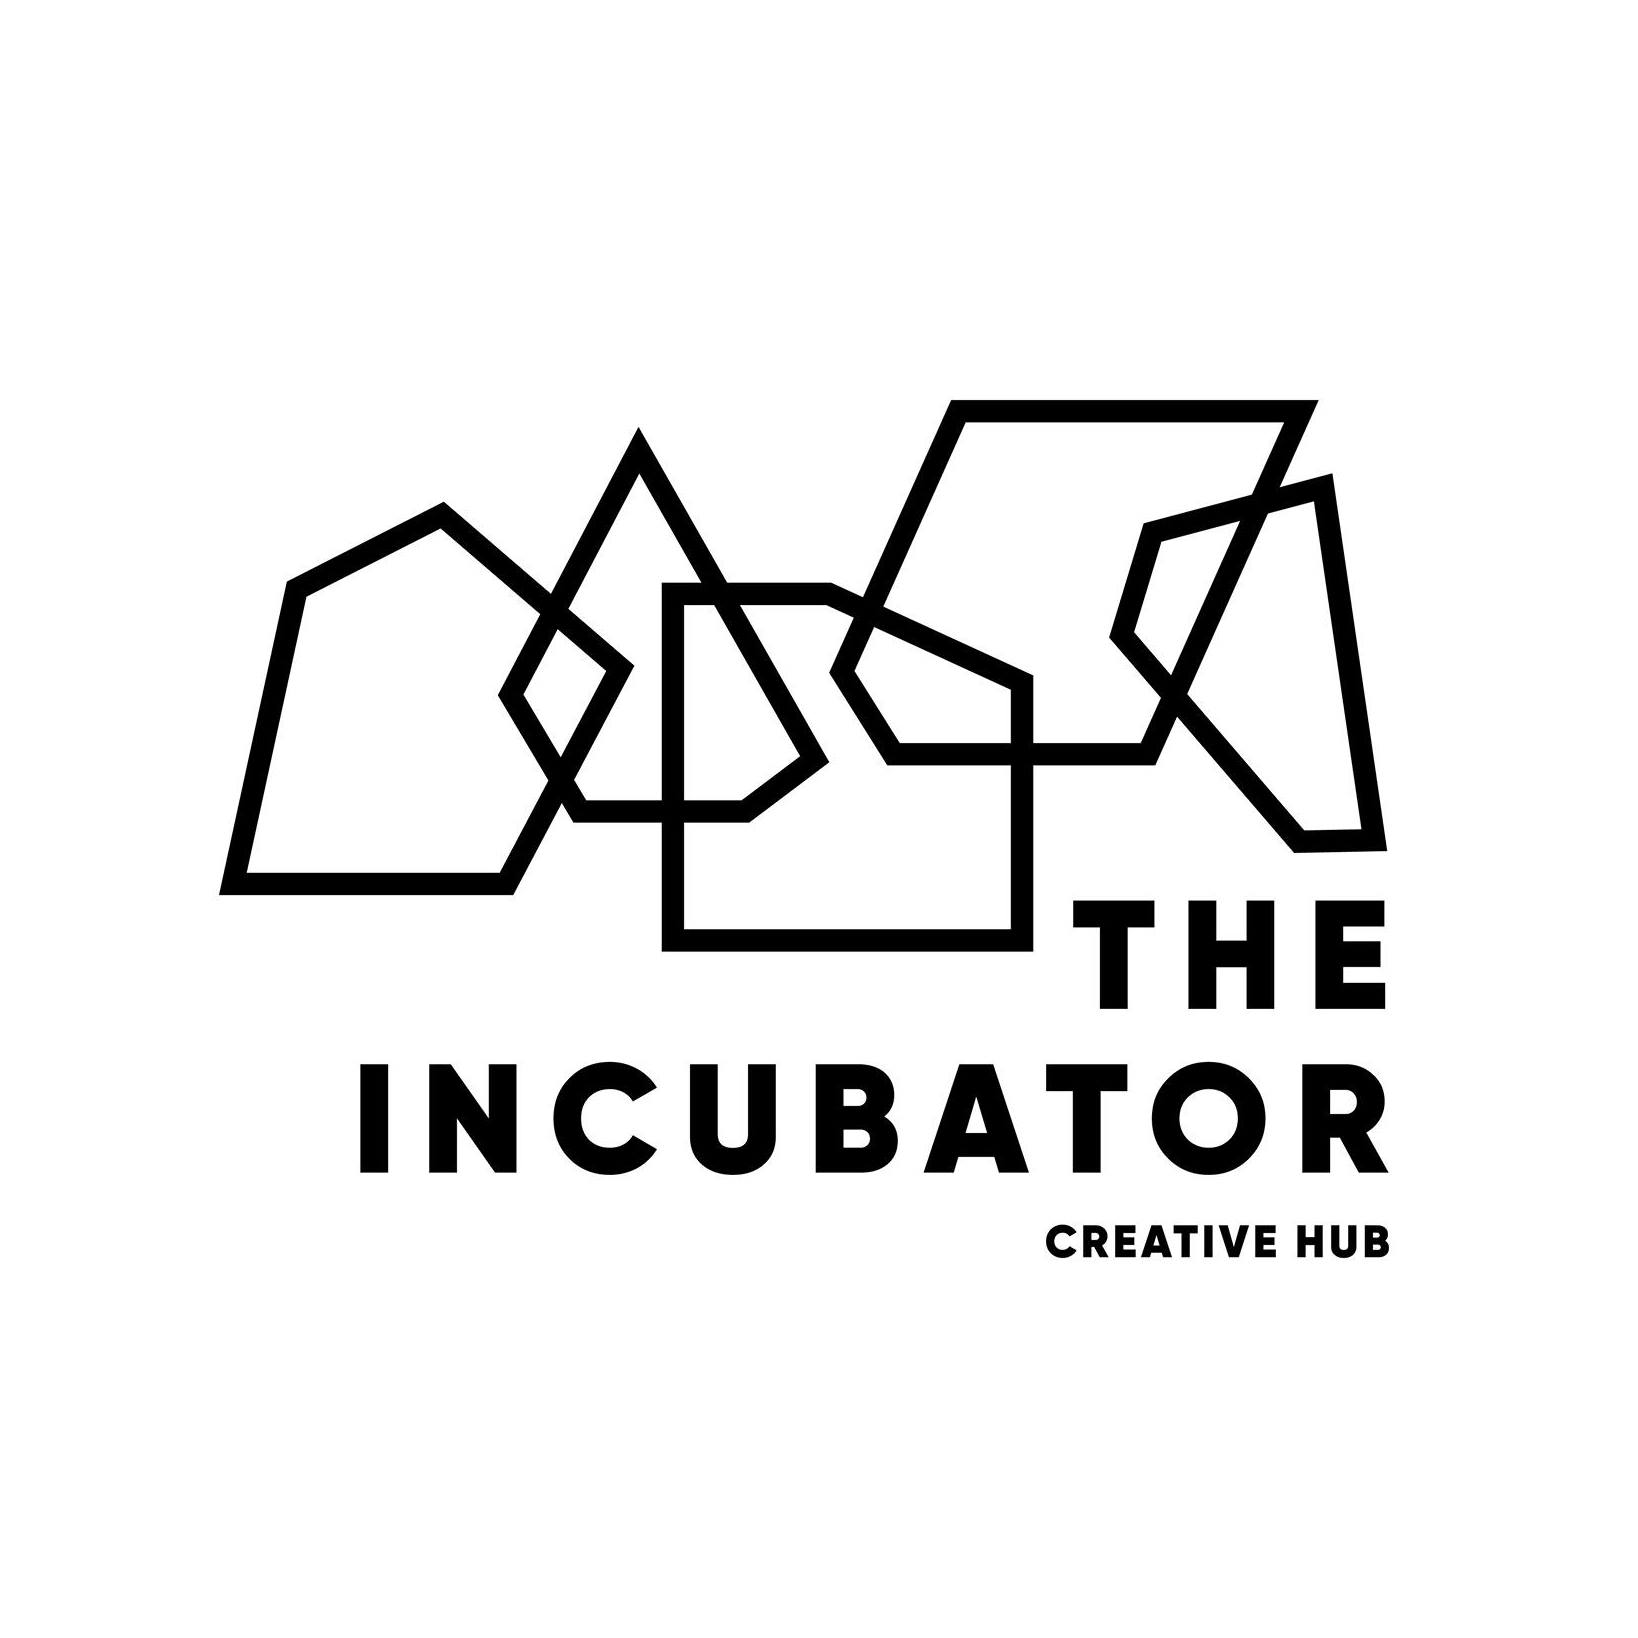 The Incubator Creative Hub